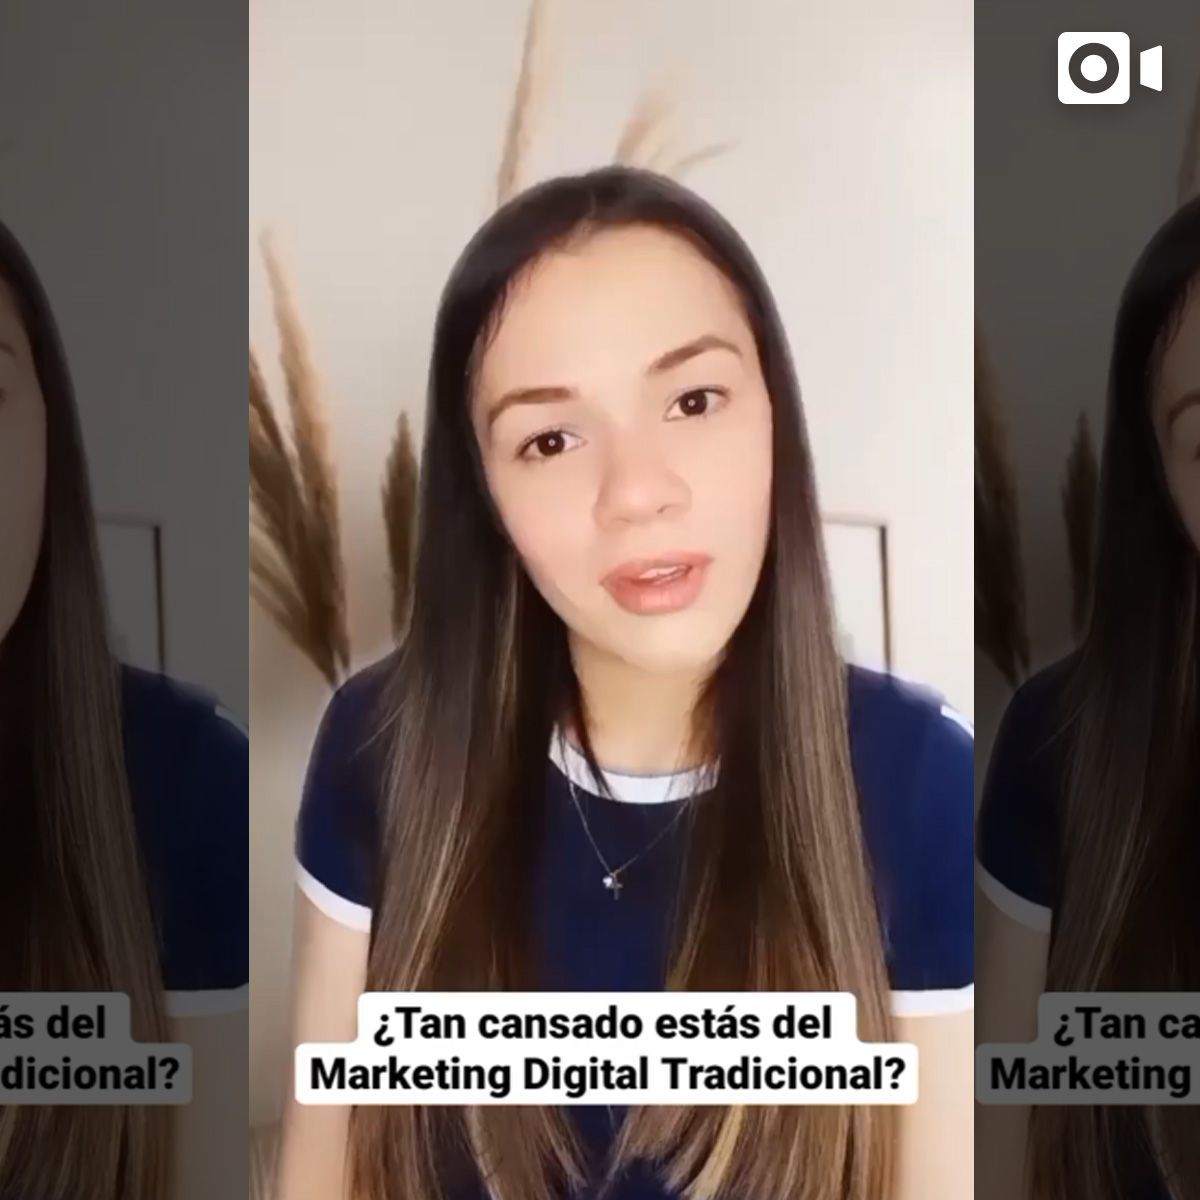 ¿Tan Cansado Estás del Marketing Digital Tradicional?